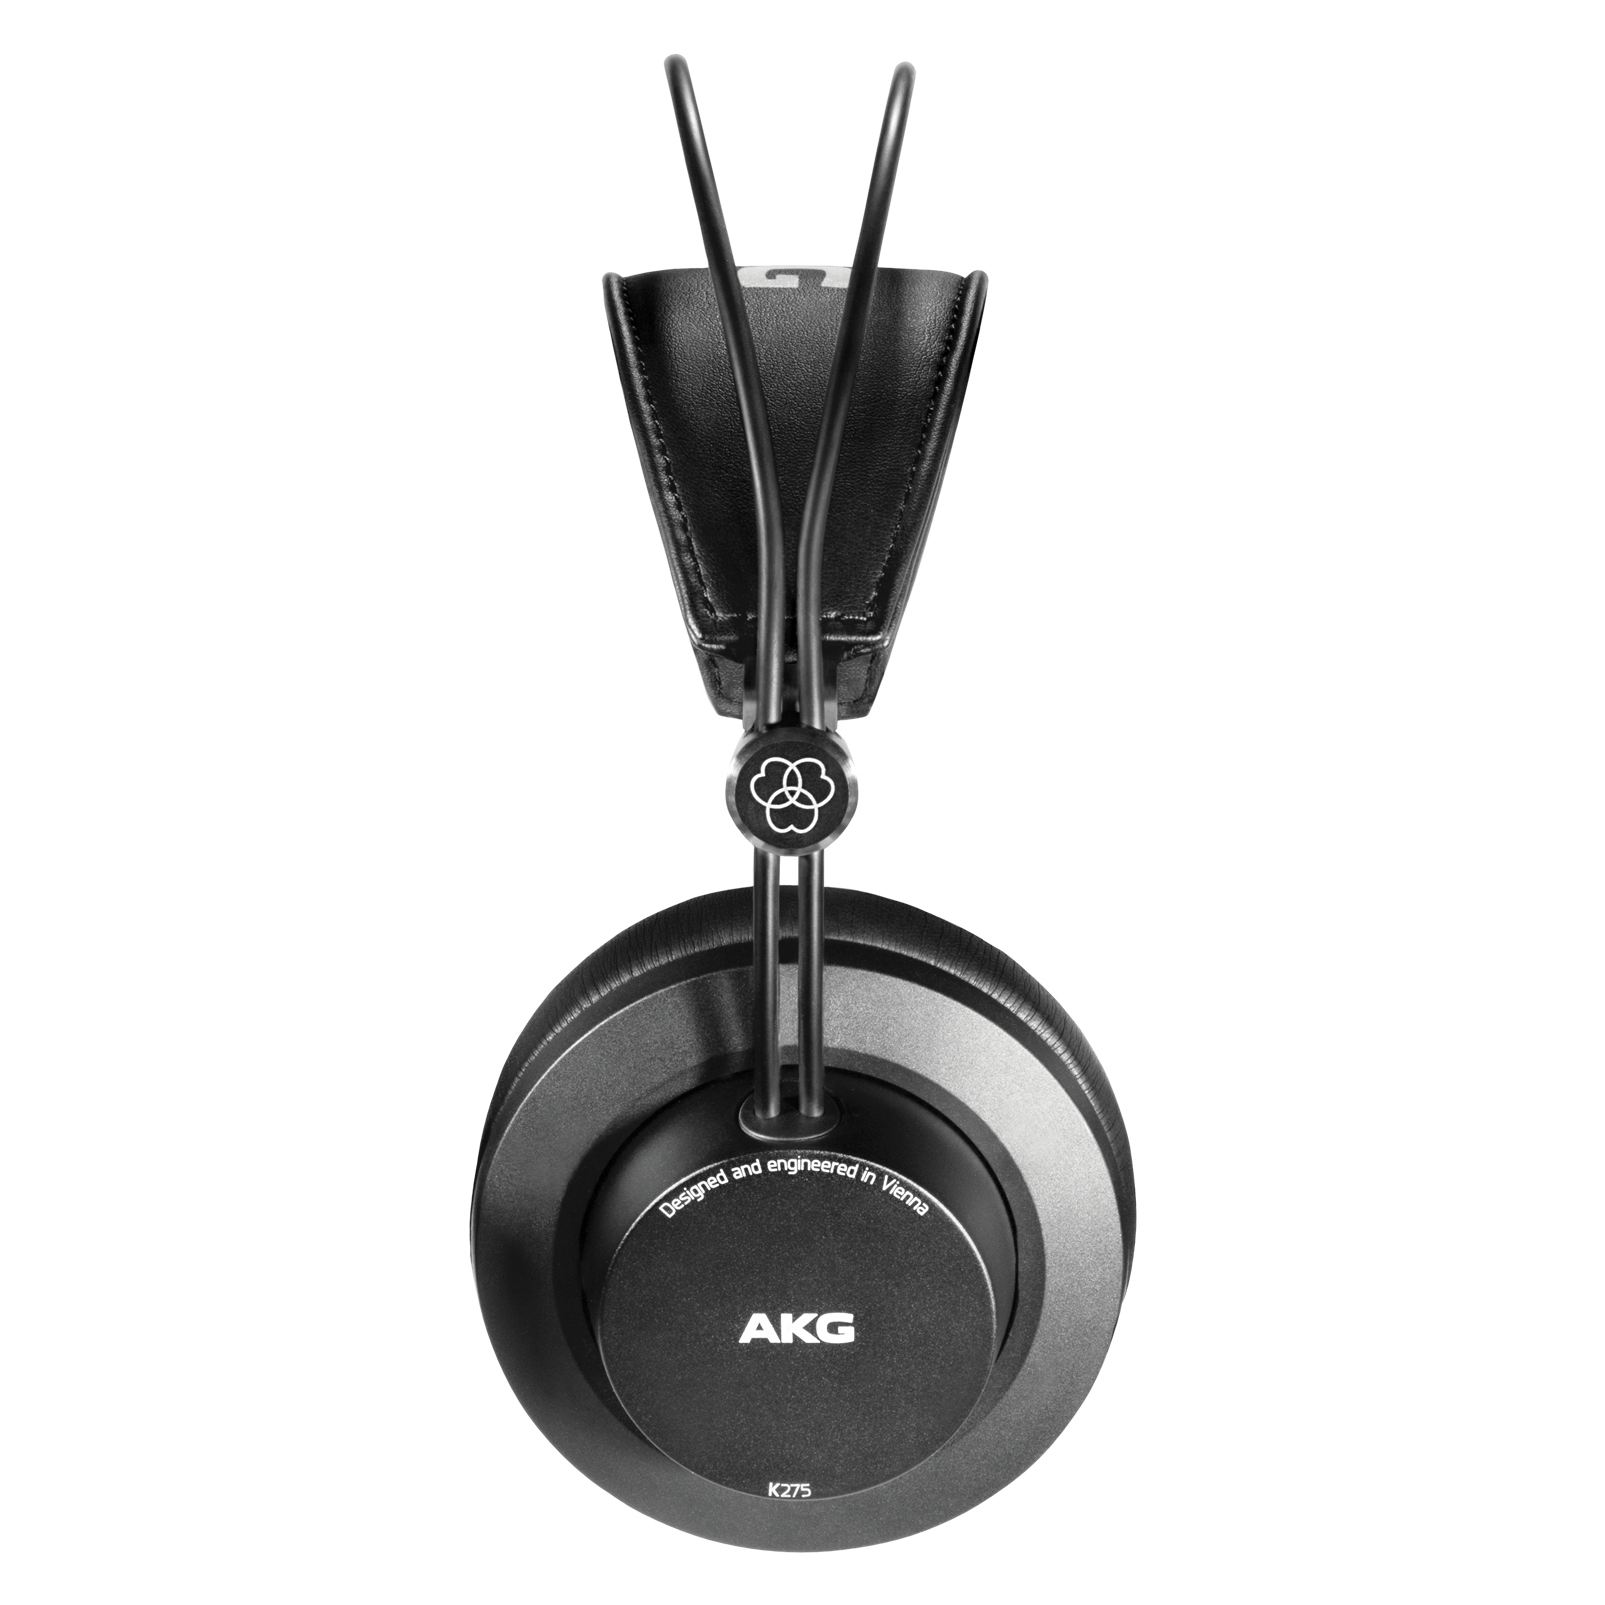 Akg K275 - Closed headset - Variation 2